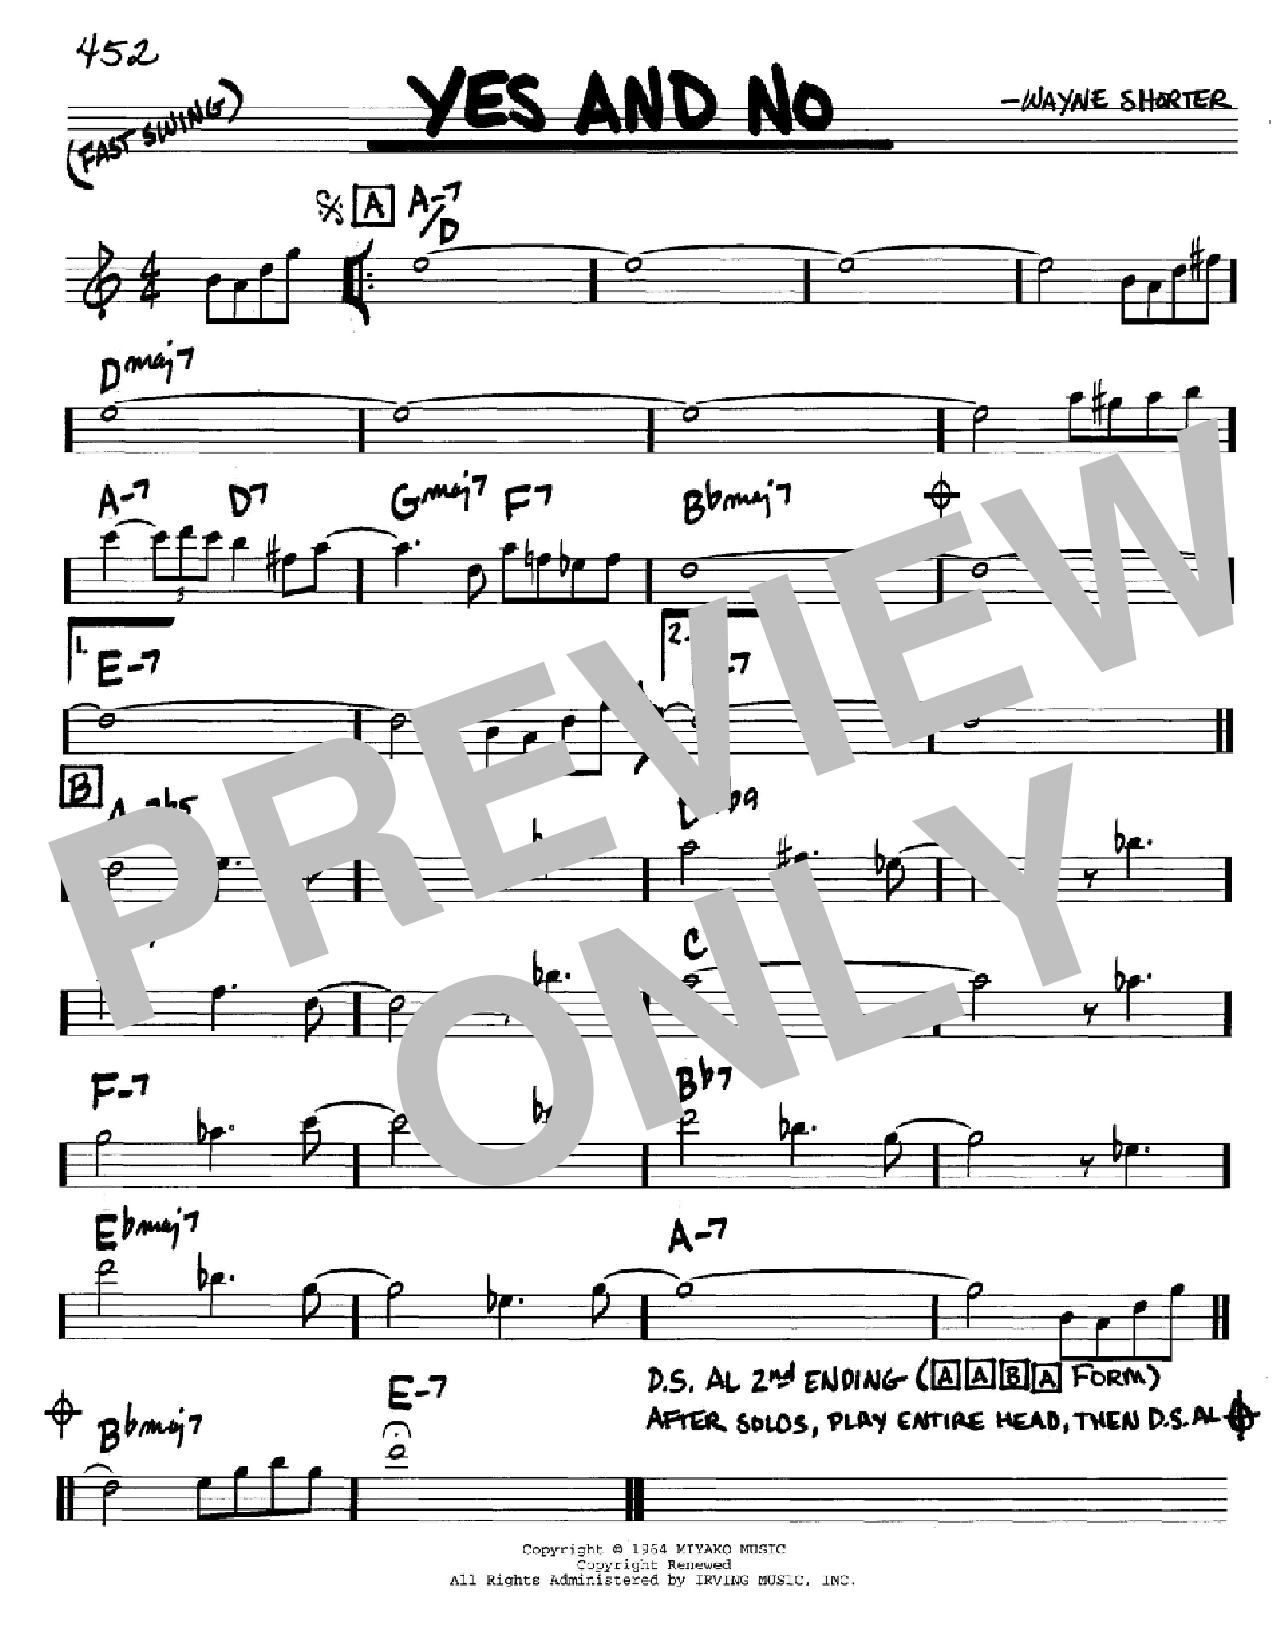 Wayne Shorter Yes And No Sheet Music Notes & Chords for Real Book - Melody & Chords - Bb Instruments - Download or Print PDF